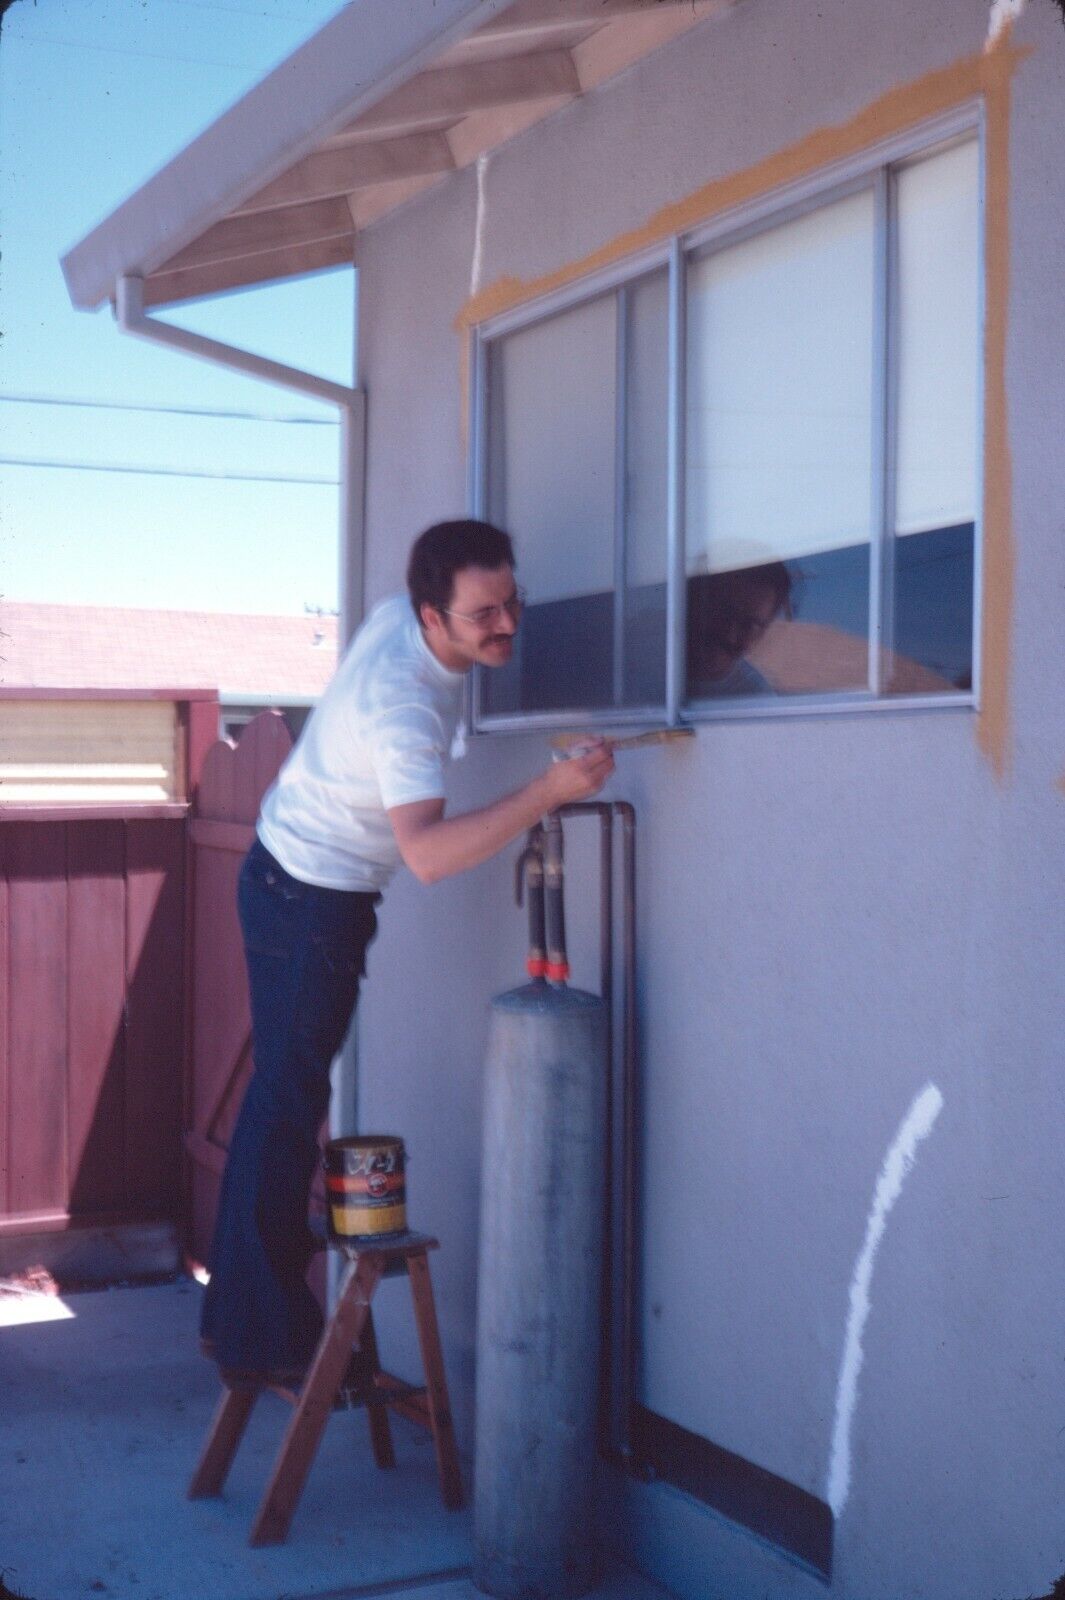 1974 Man Mustache Painting House Trim 70s Vintage 35mm Slide